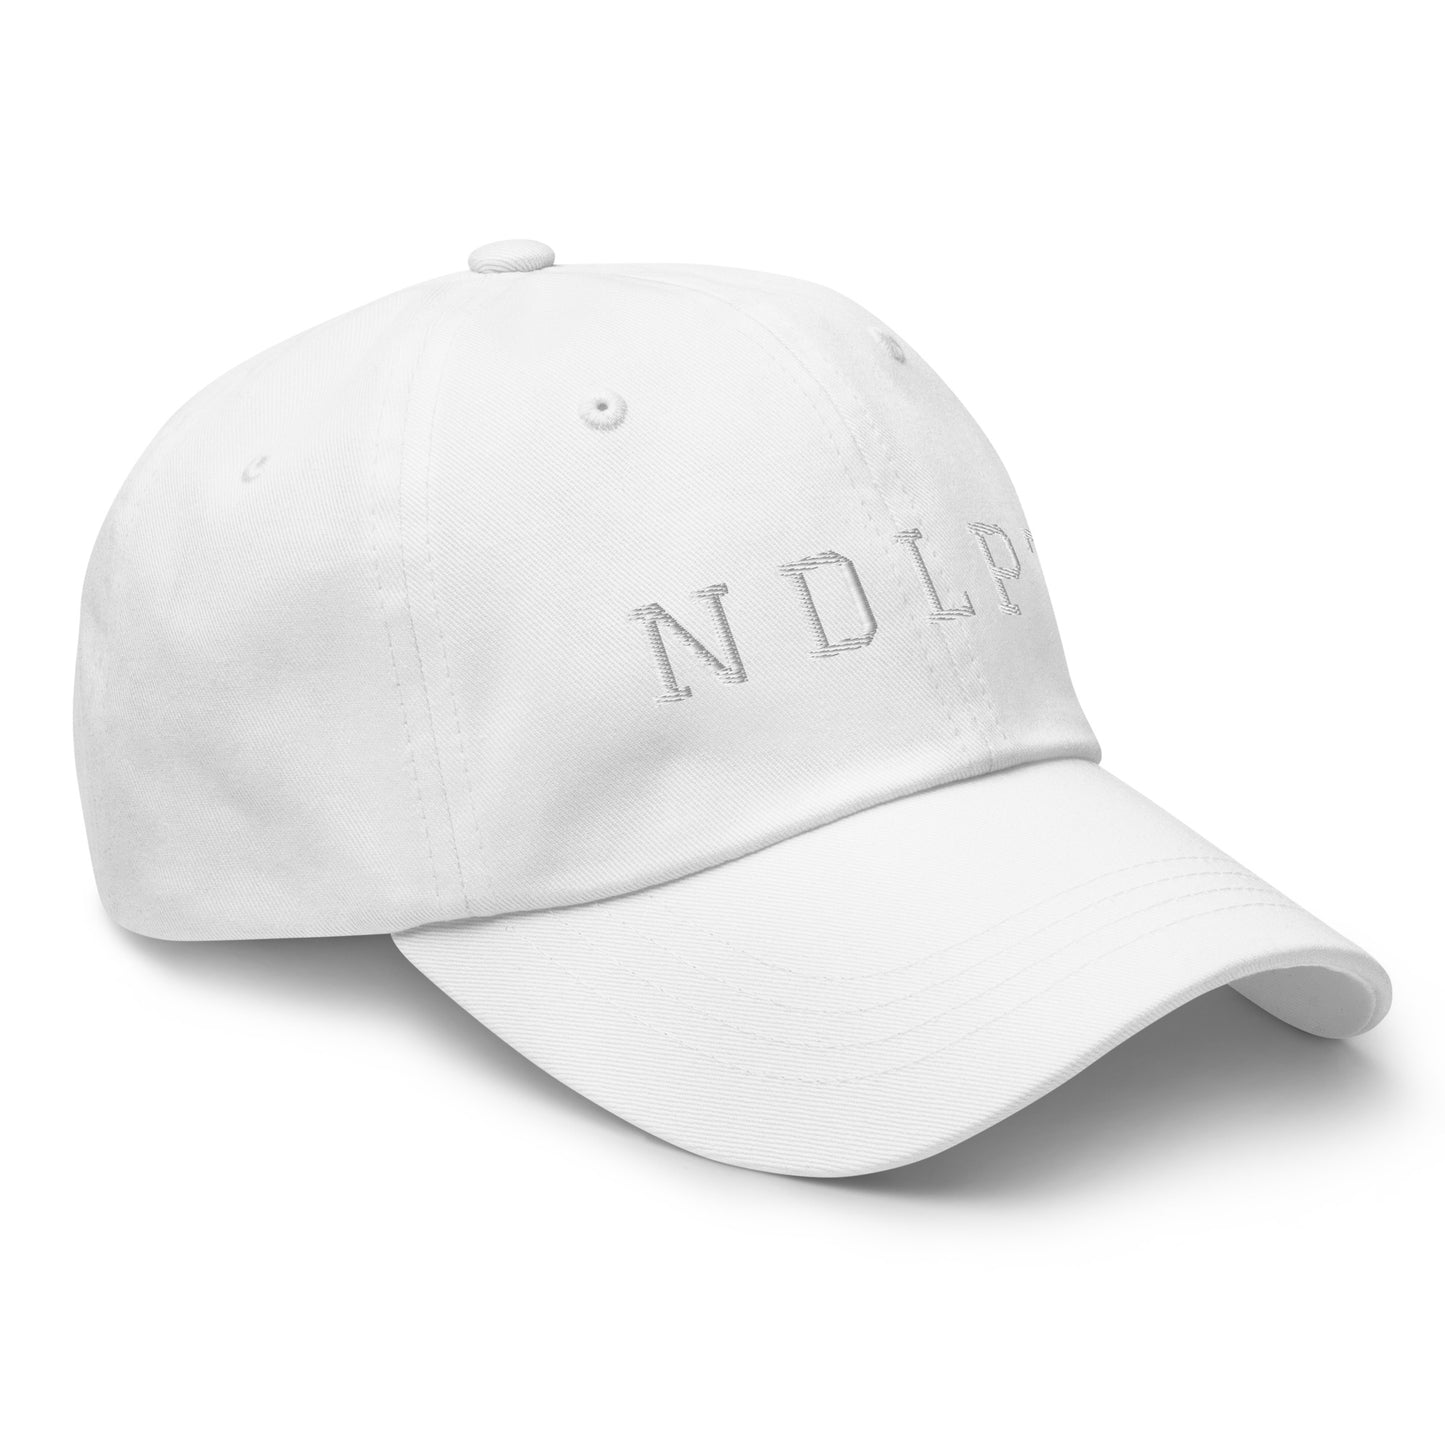 NDLPT Hat